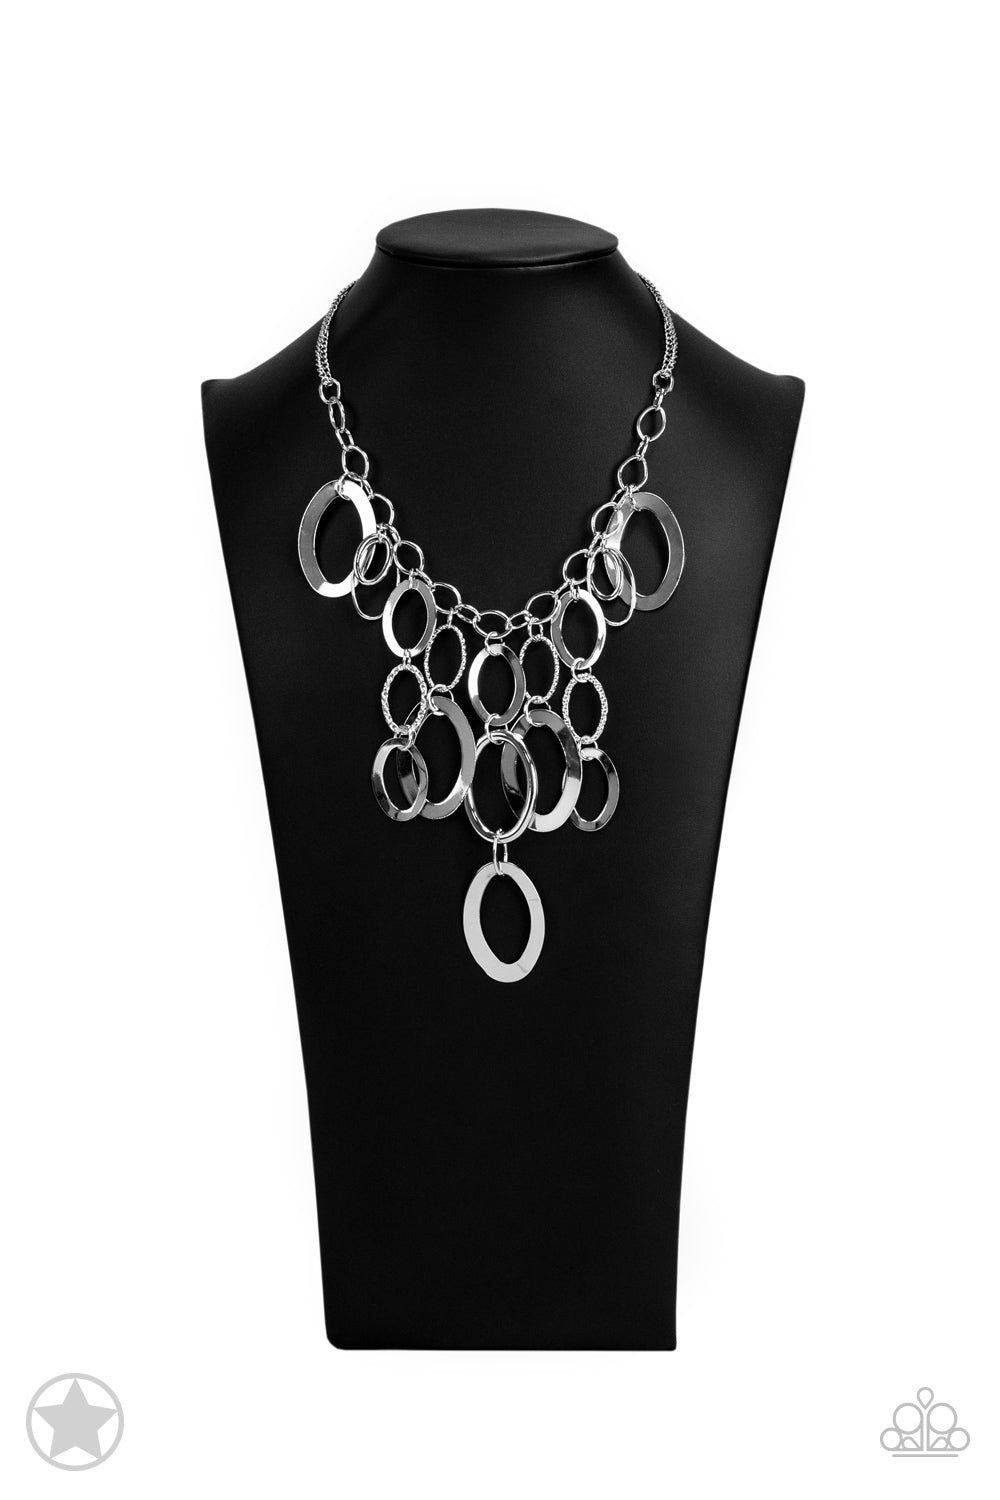 A Silver Spell - Silver Textured Medium-Length Necklace